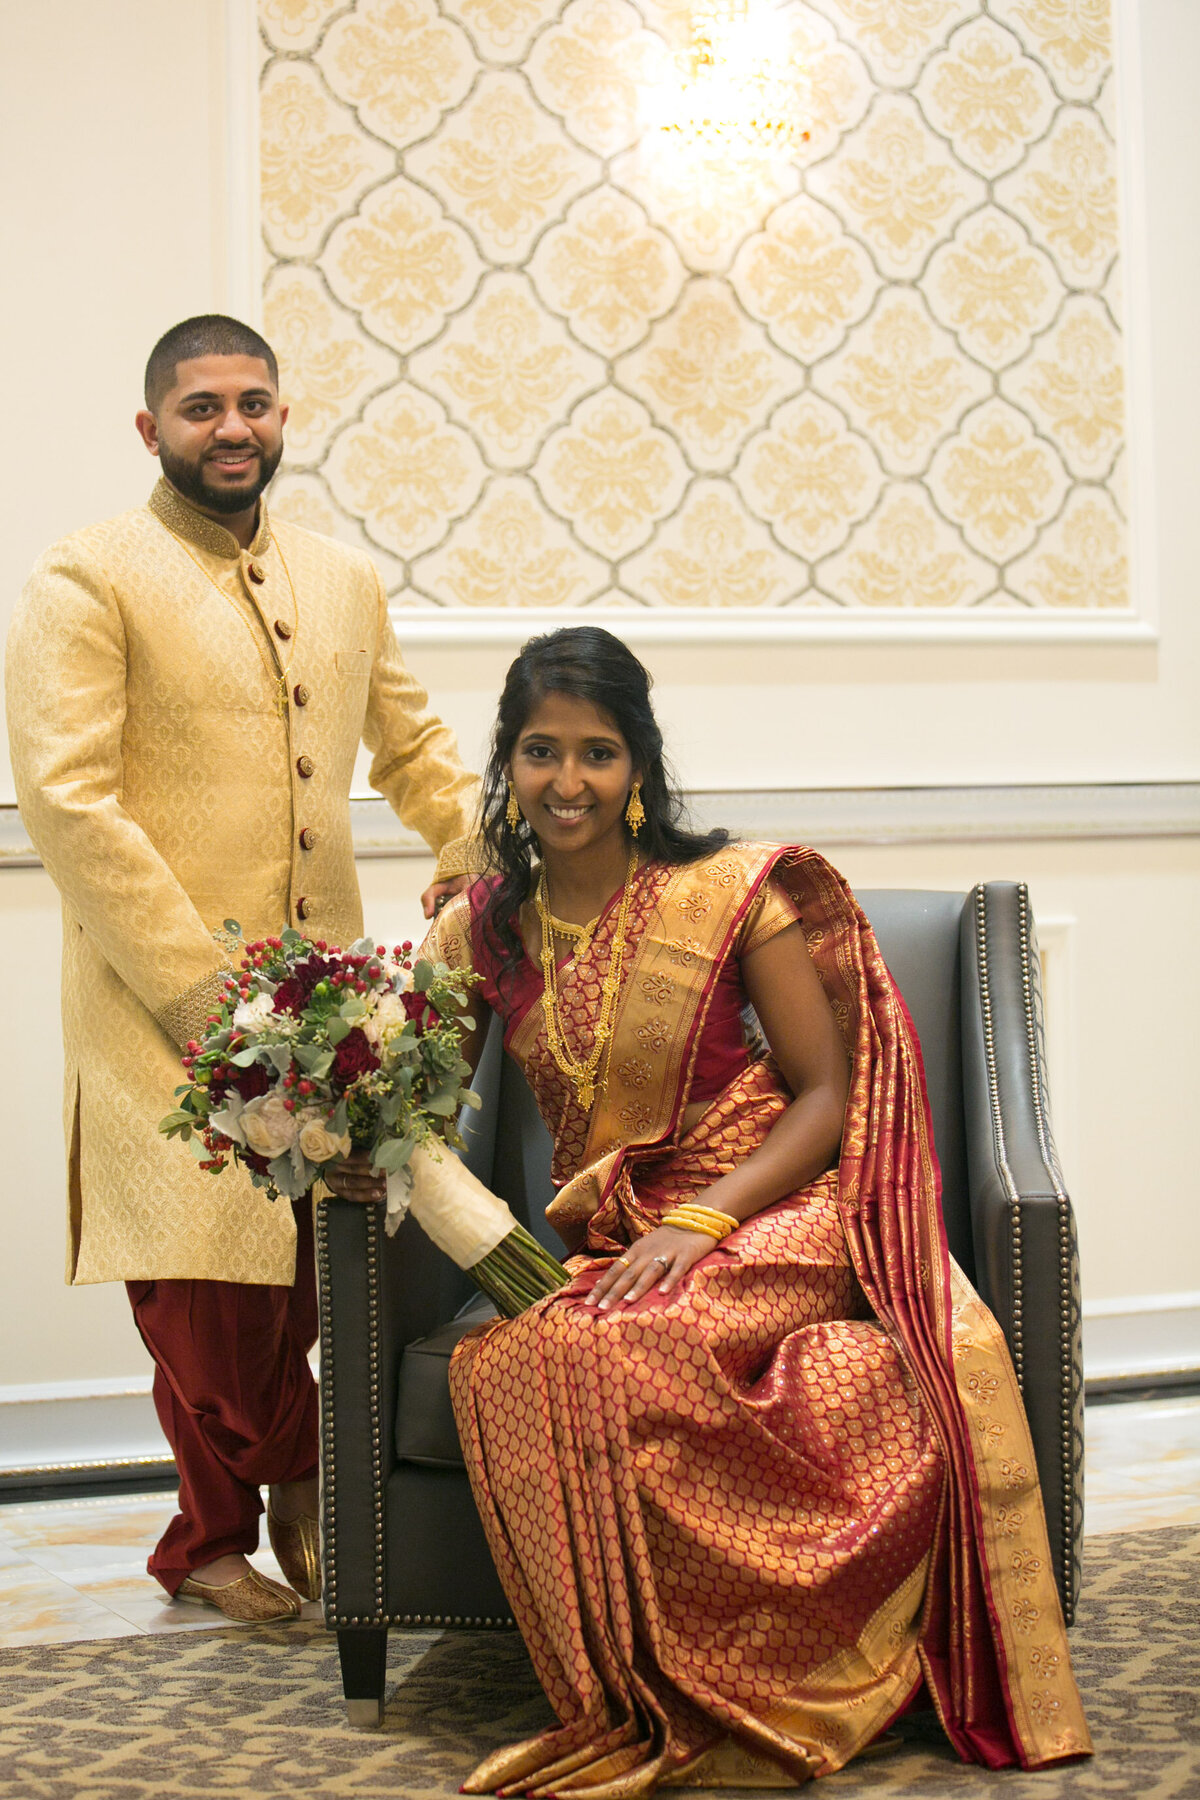 njeri-bishota-lauren-ashley-traditional-indian-wedding-bride-sitting-groom-standing-floral-bouquet